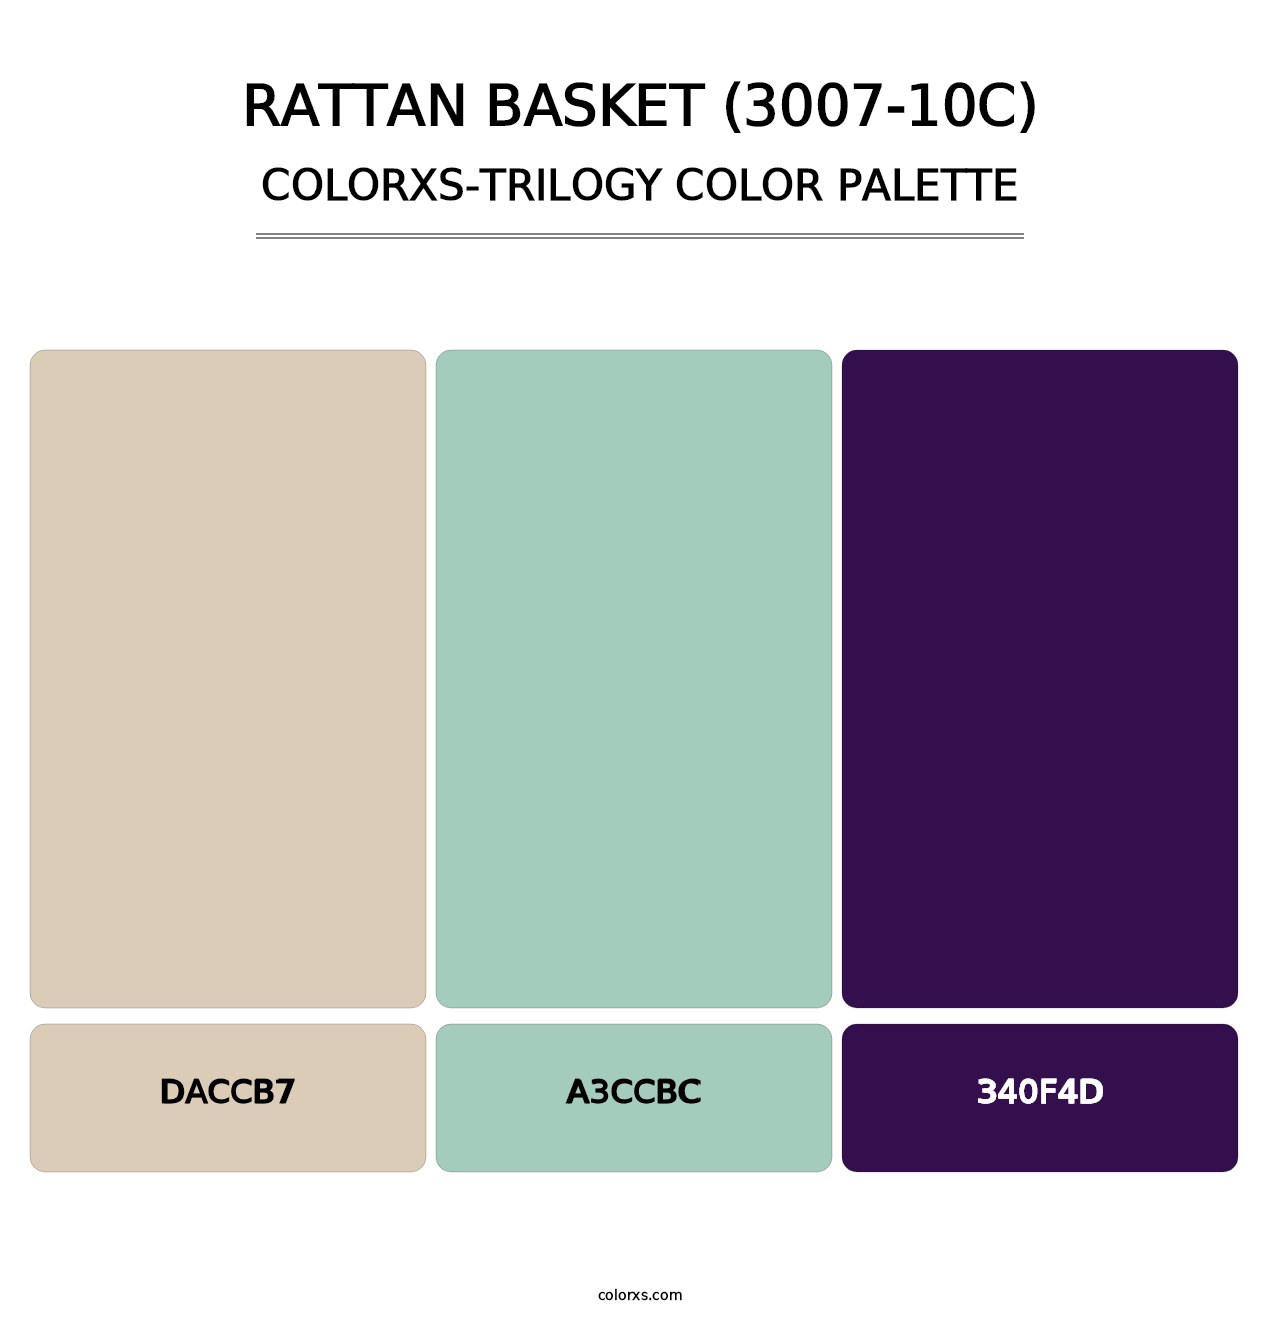 Rattan Basket (3007-10C) - Colorxs Trilogy Palette